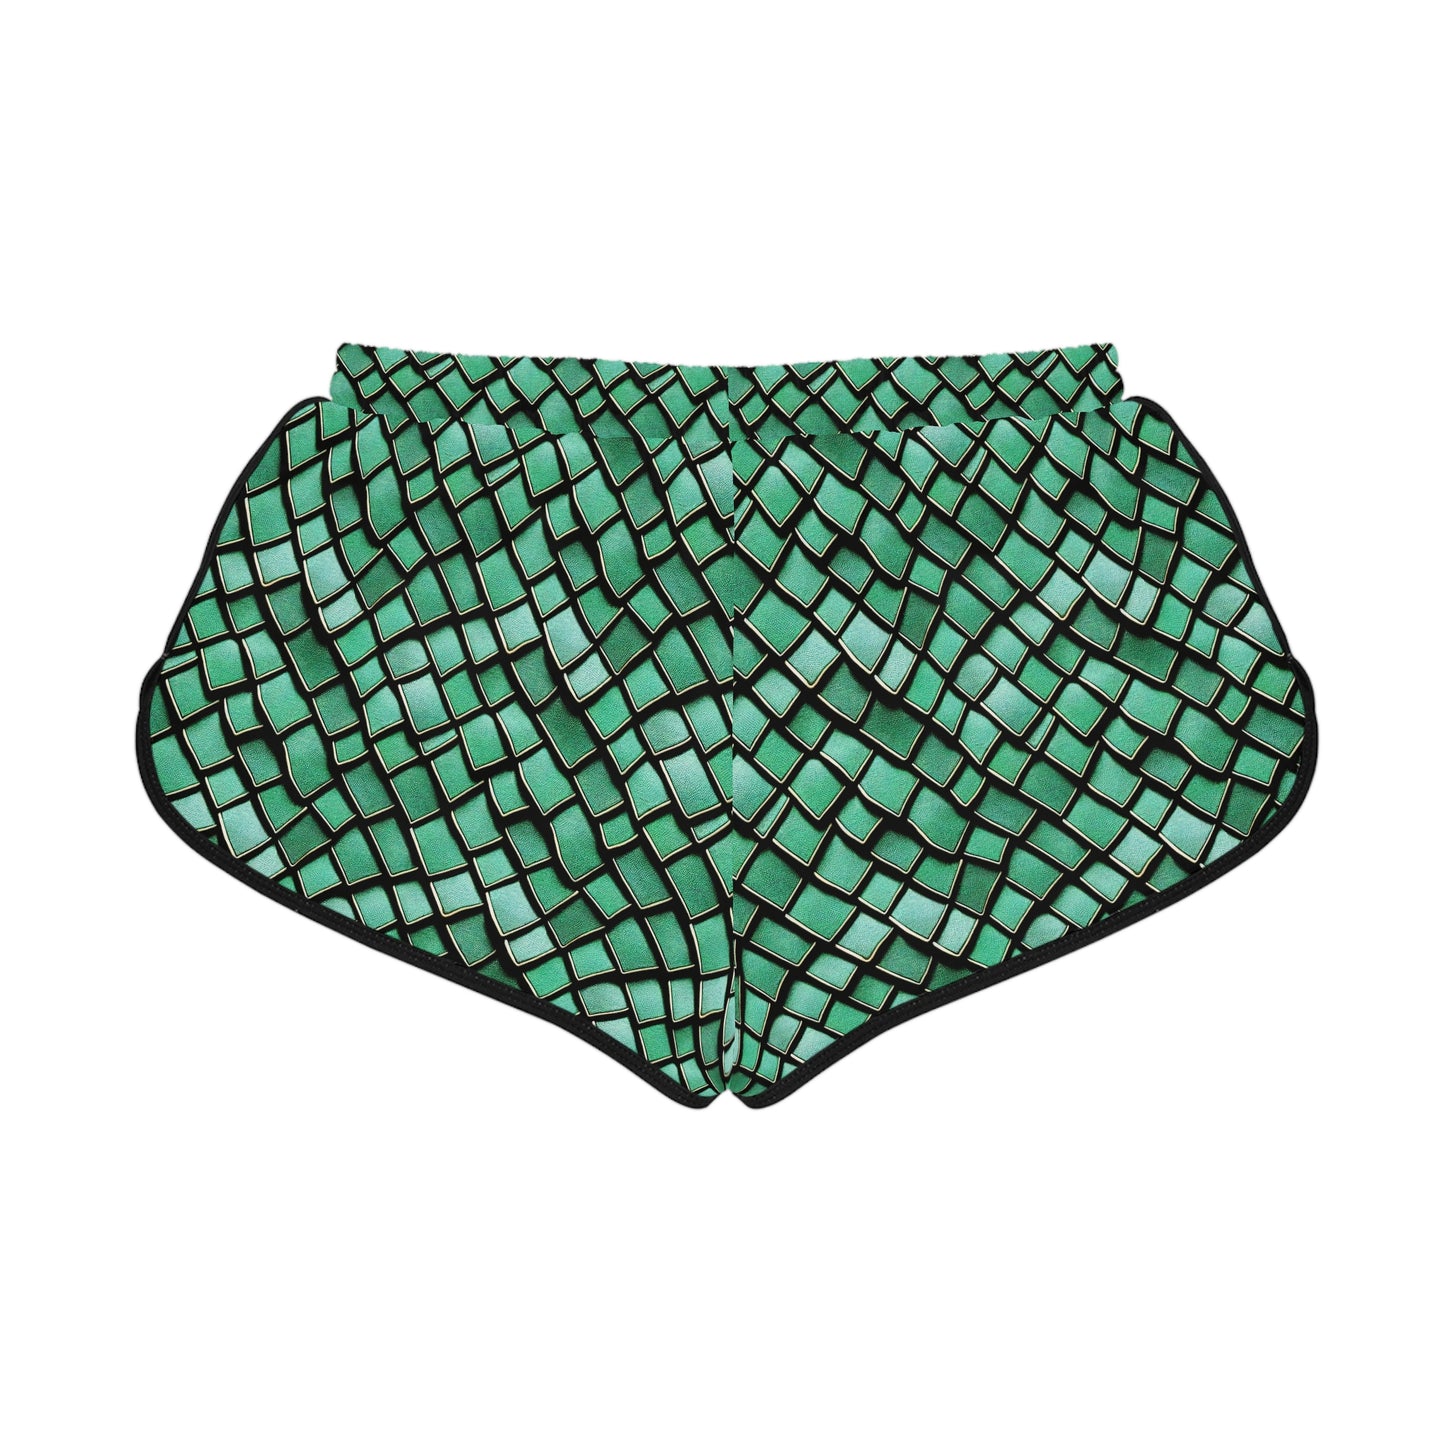 Green Mermaid Dragon Scale Women's Custom-Printed Shorts - Ocean Inspired Design, Gym, Beach, Pool, Workout, Athleticwear,